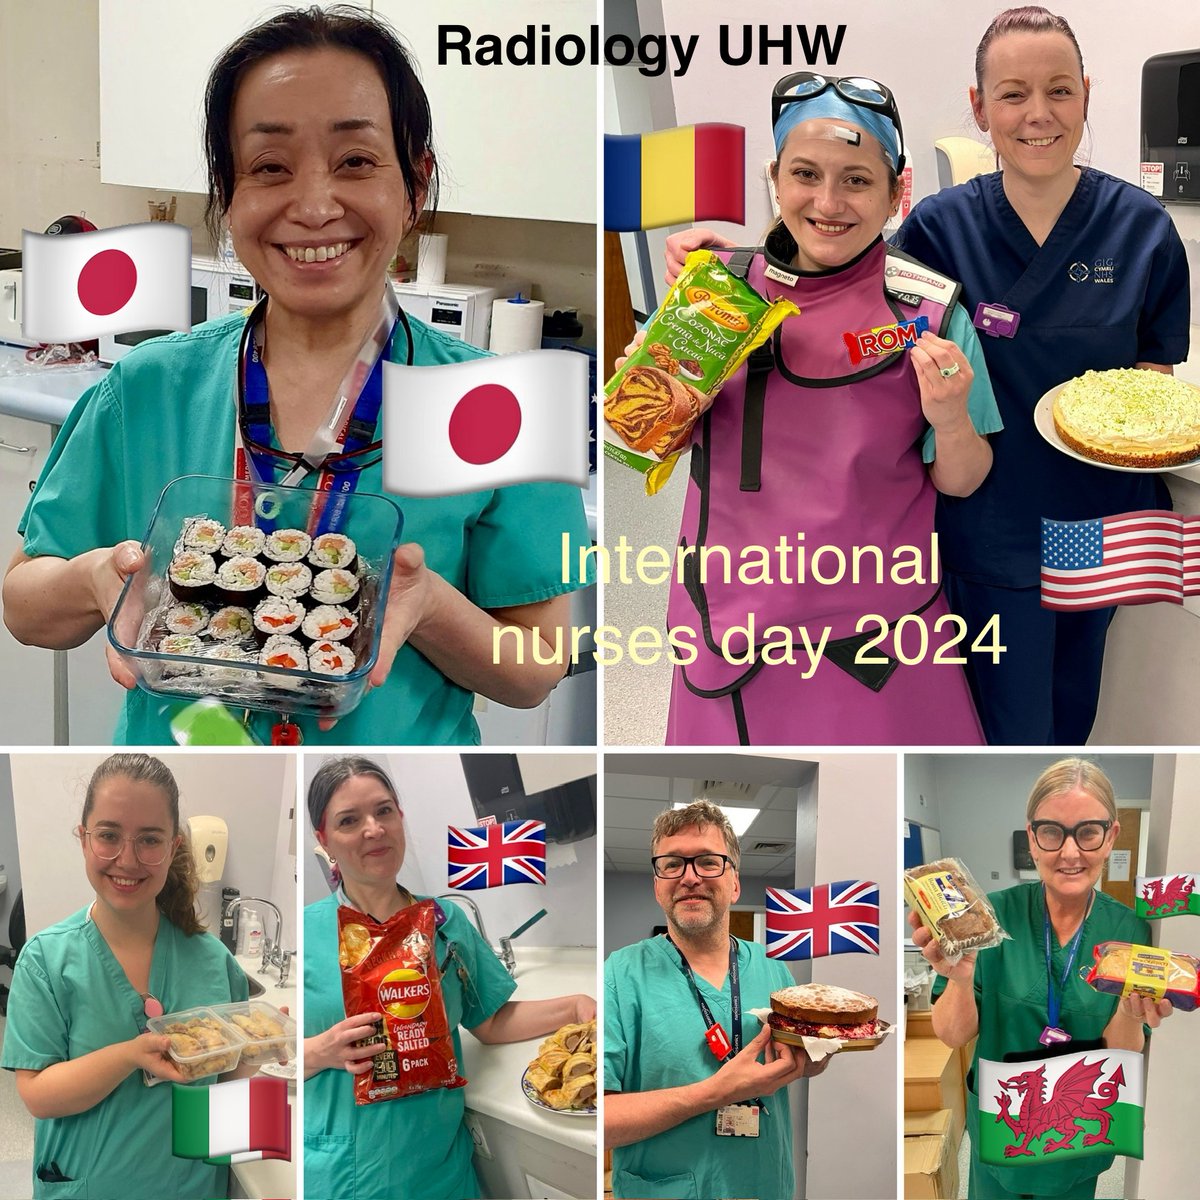 Happy International Nurses Day from our team in Radiology. @CV_UHB @jem890 @Jas_Roberts10 @jem890 #IND2024 #InternationalNursesDay